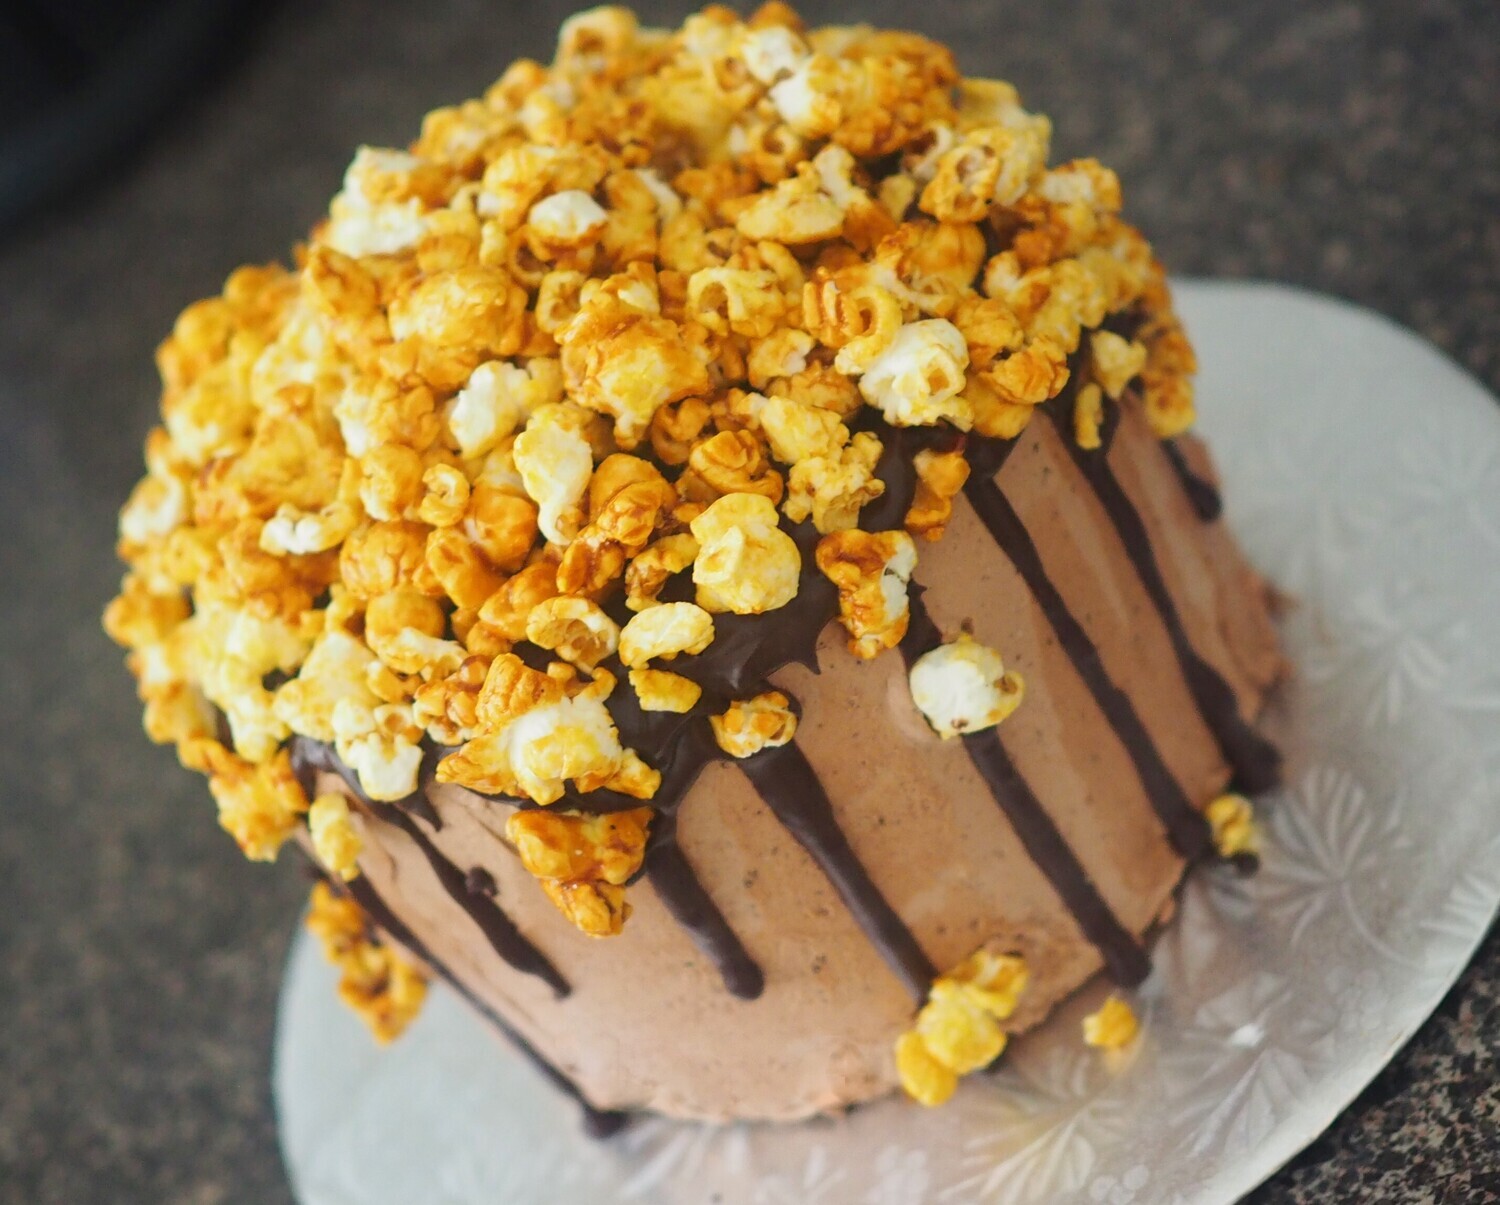 Vegan chocolate cake with chocolate swiss meringue buttercream and vegan caramel popcorn on the top. GLUTEN FREE available.